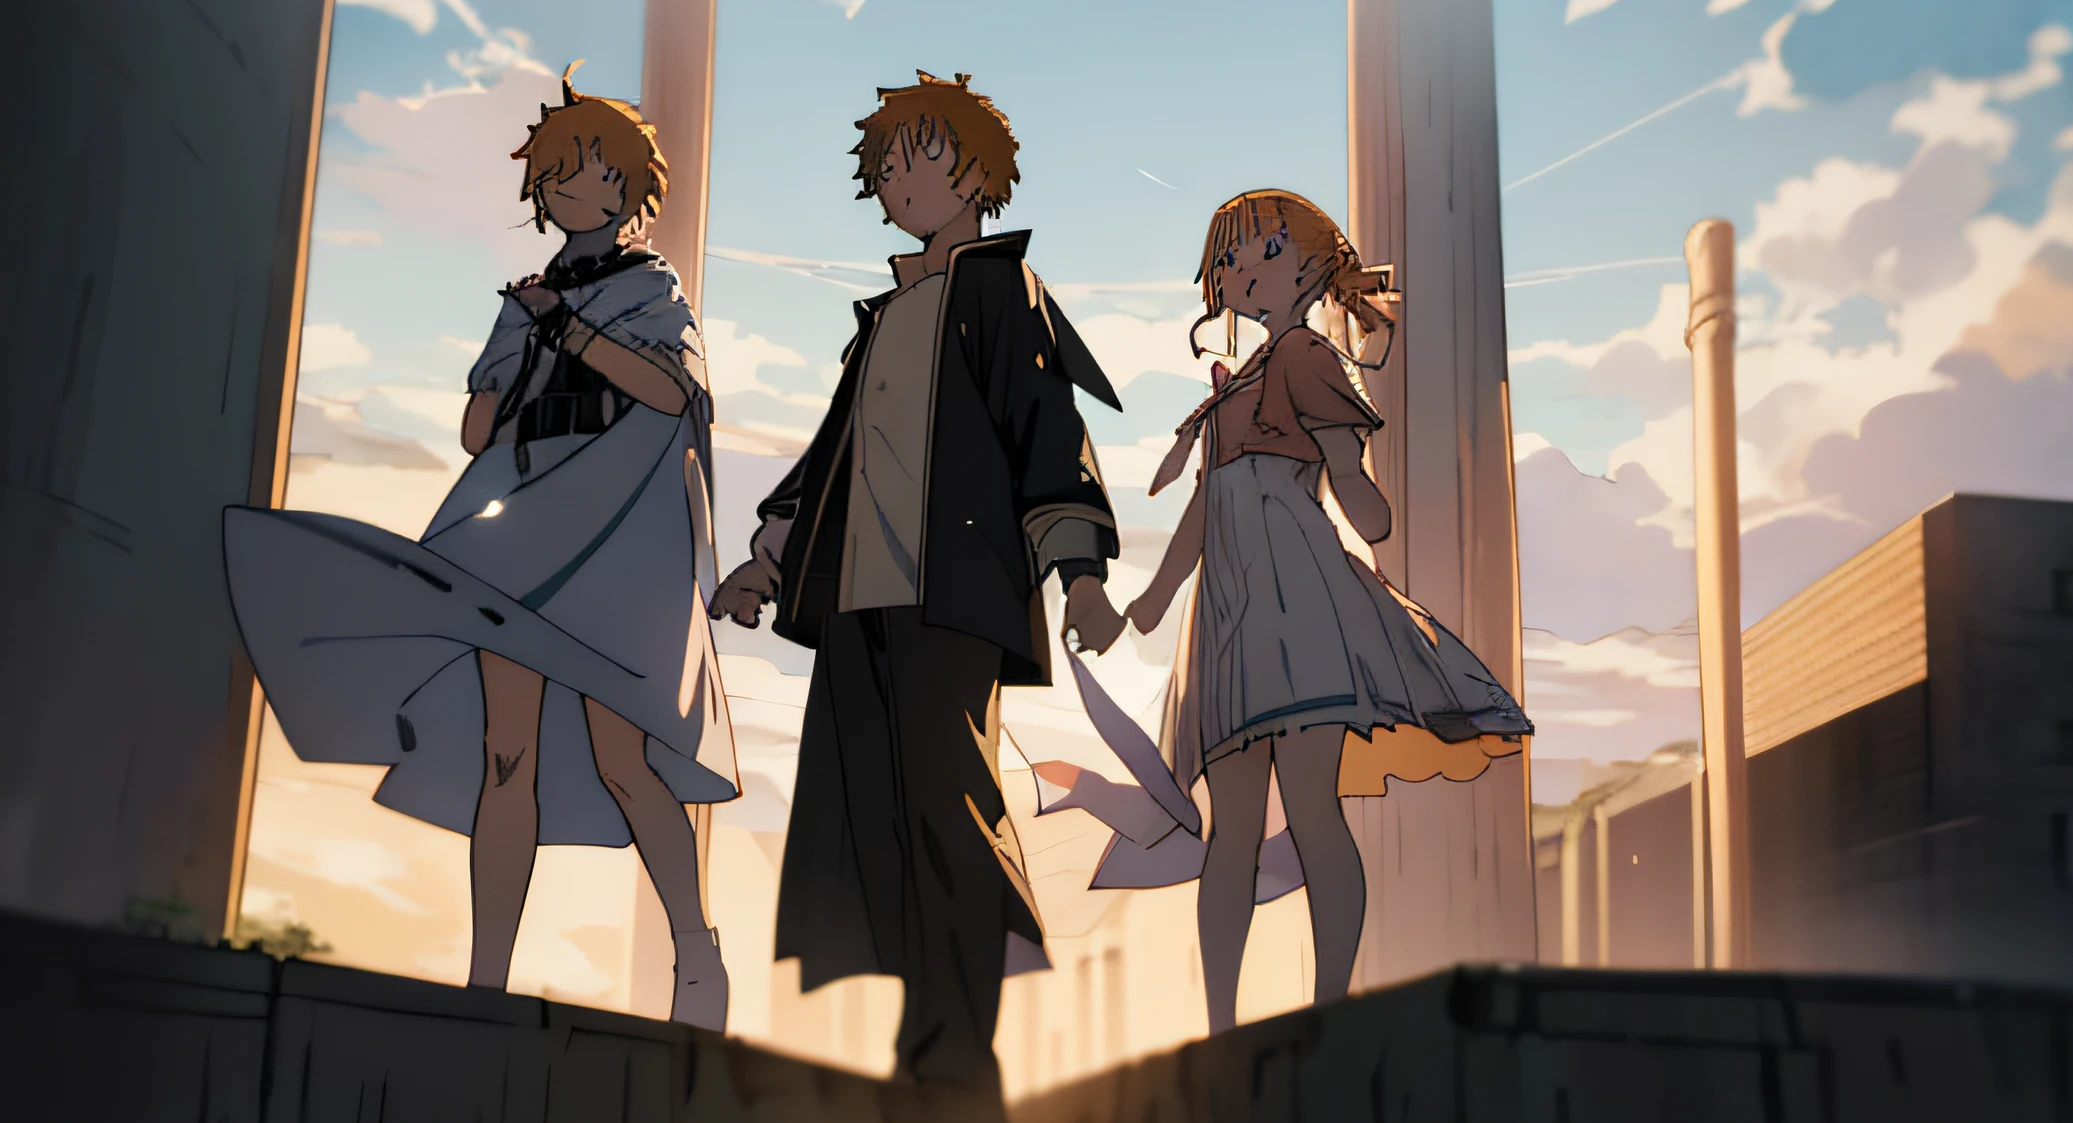 3 anime characters in front of a building with columns, denji kirito e asuna. cena de anime. otima qualidade